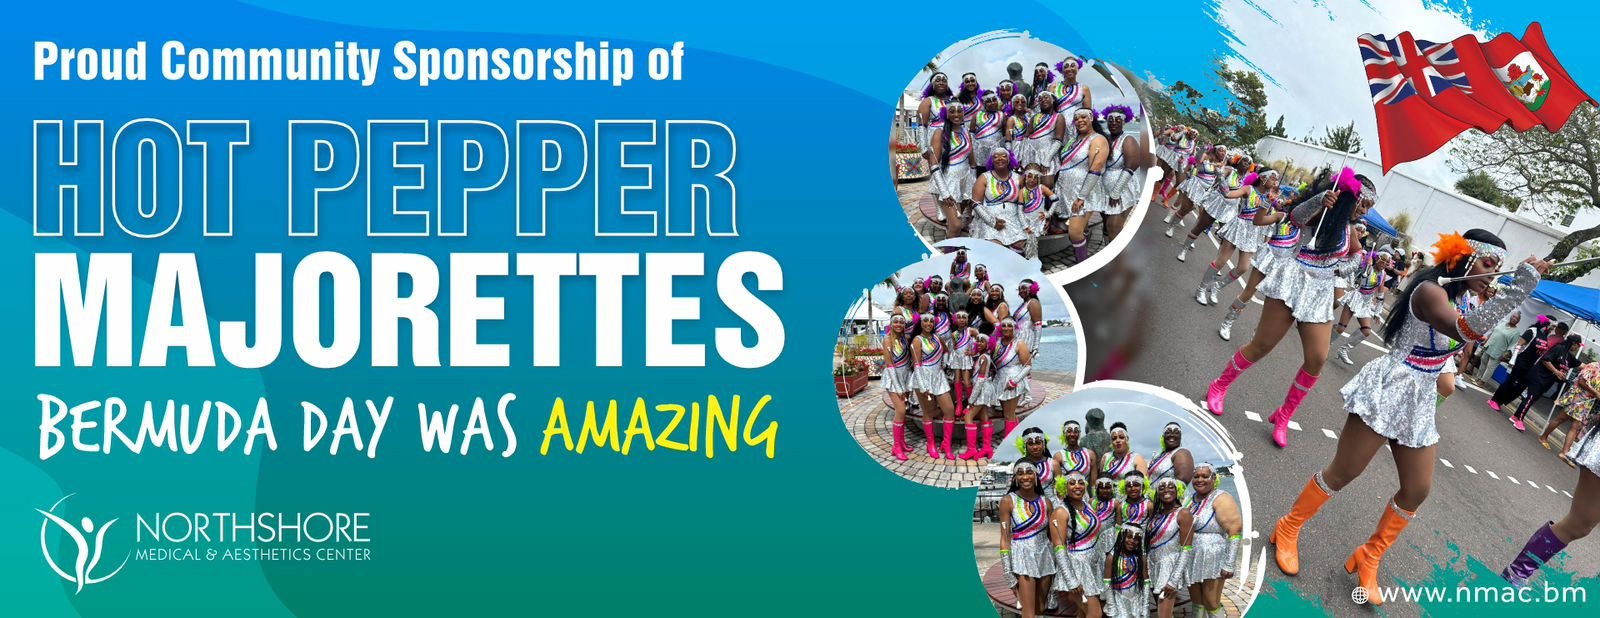 Proud Community Sponsorship of HOT PEPPER MAJORETTES - Bermuda Day Was Amazing